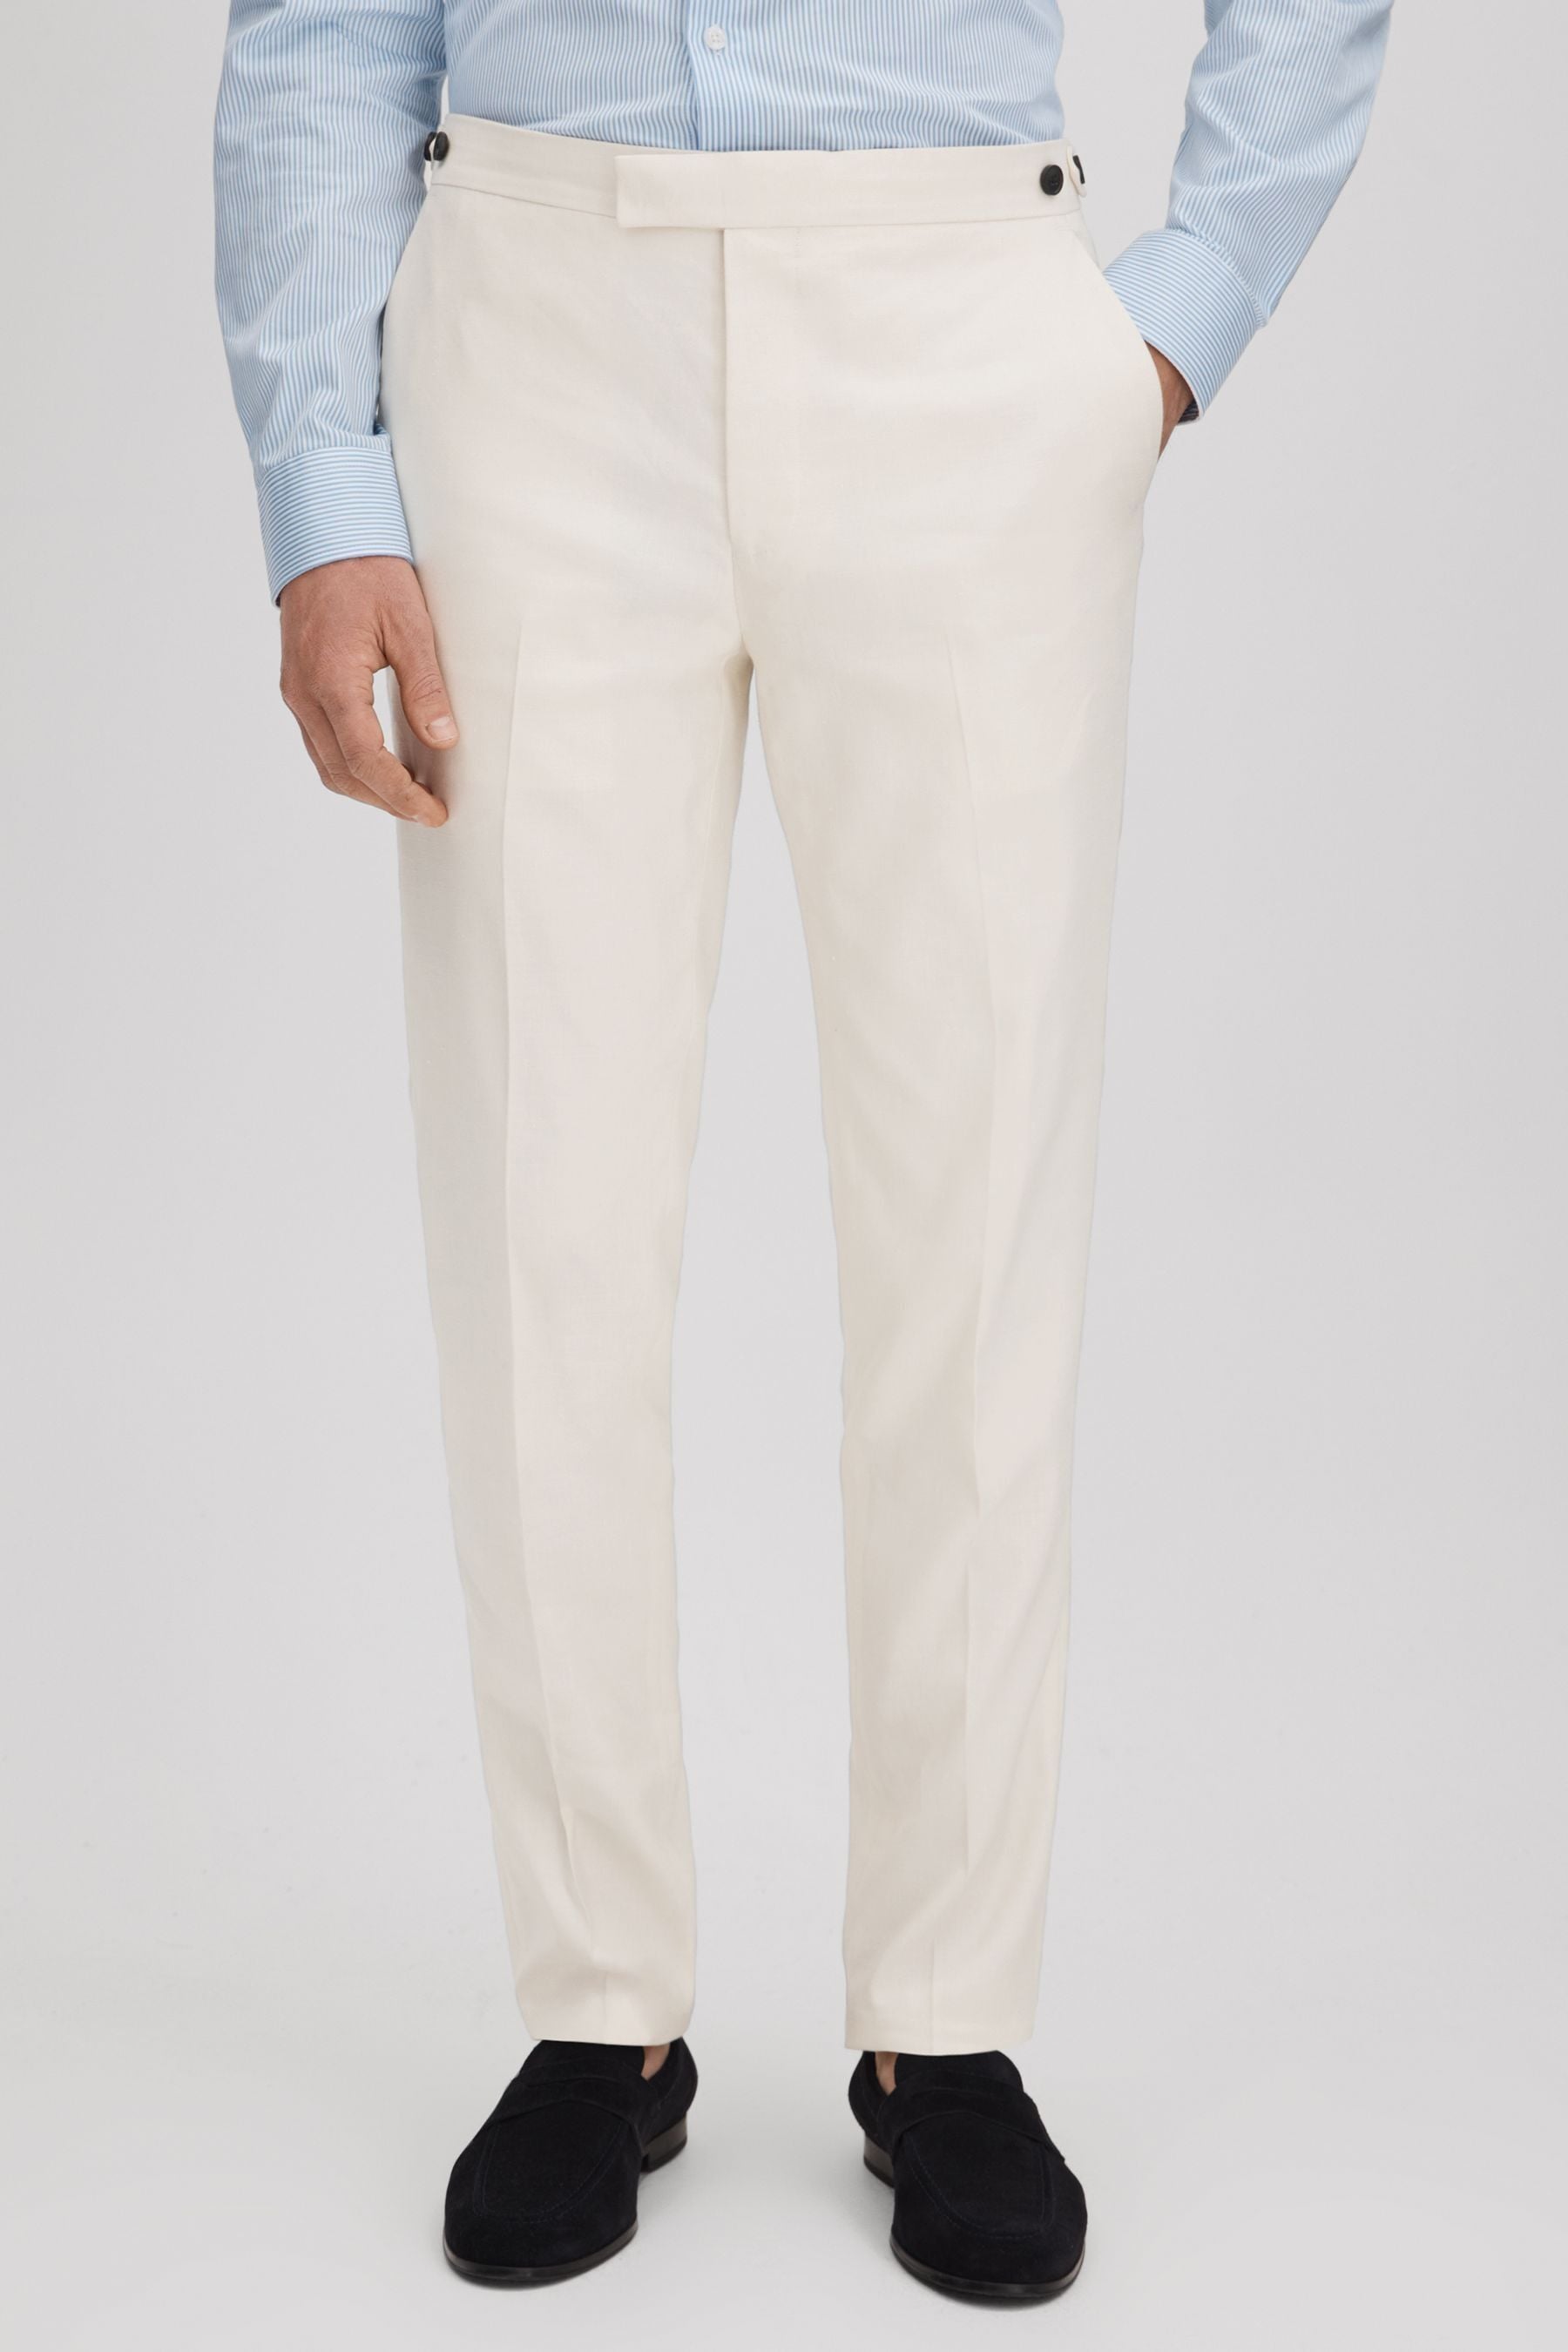 Reiss Heat - Off White Linen Blend Adjuster Trousers, 32